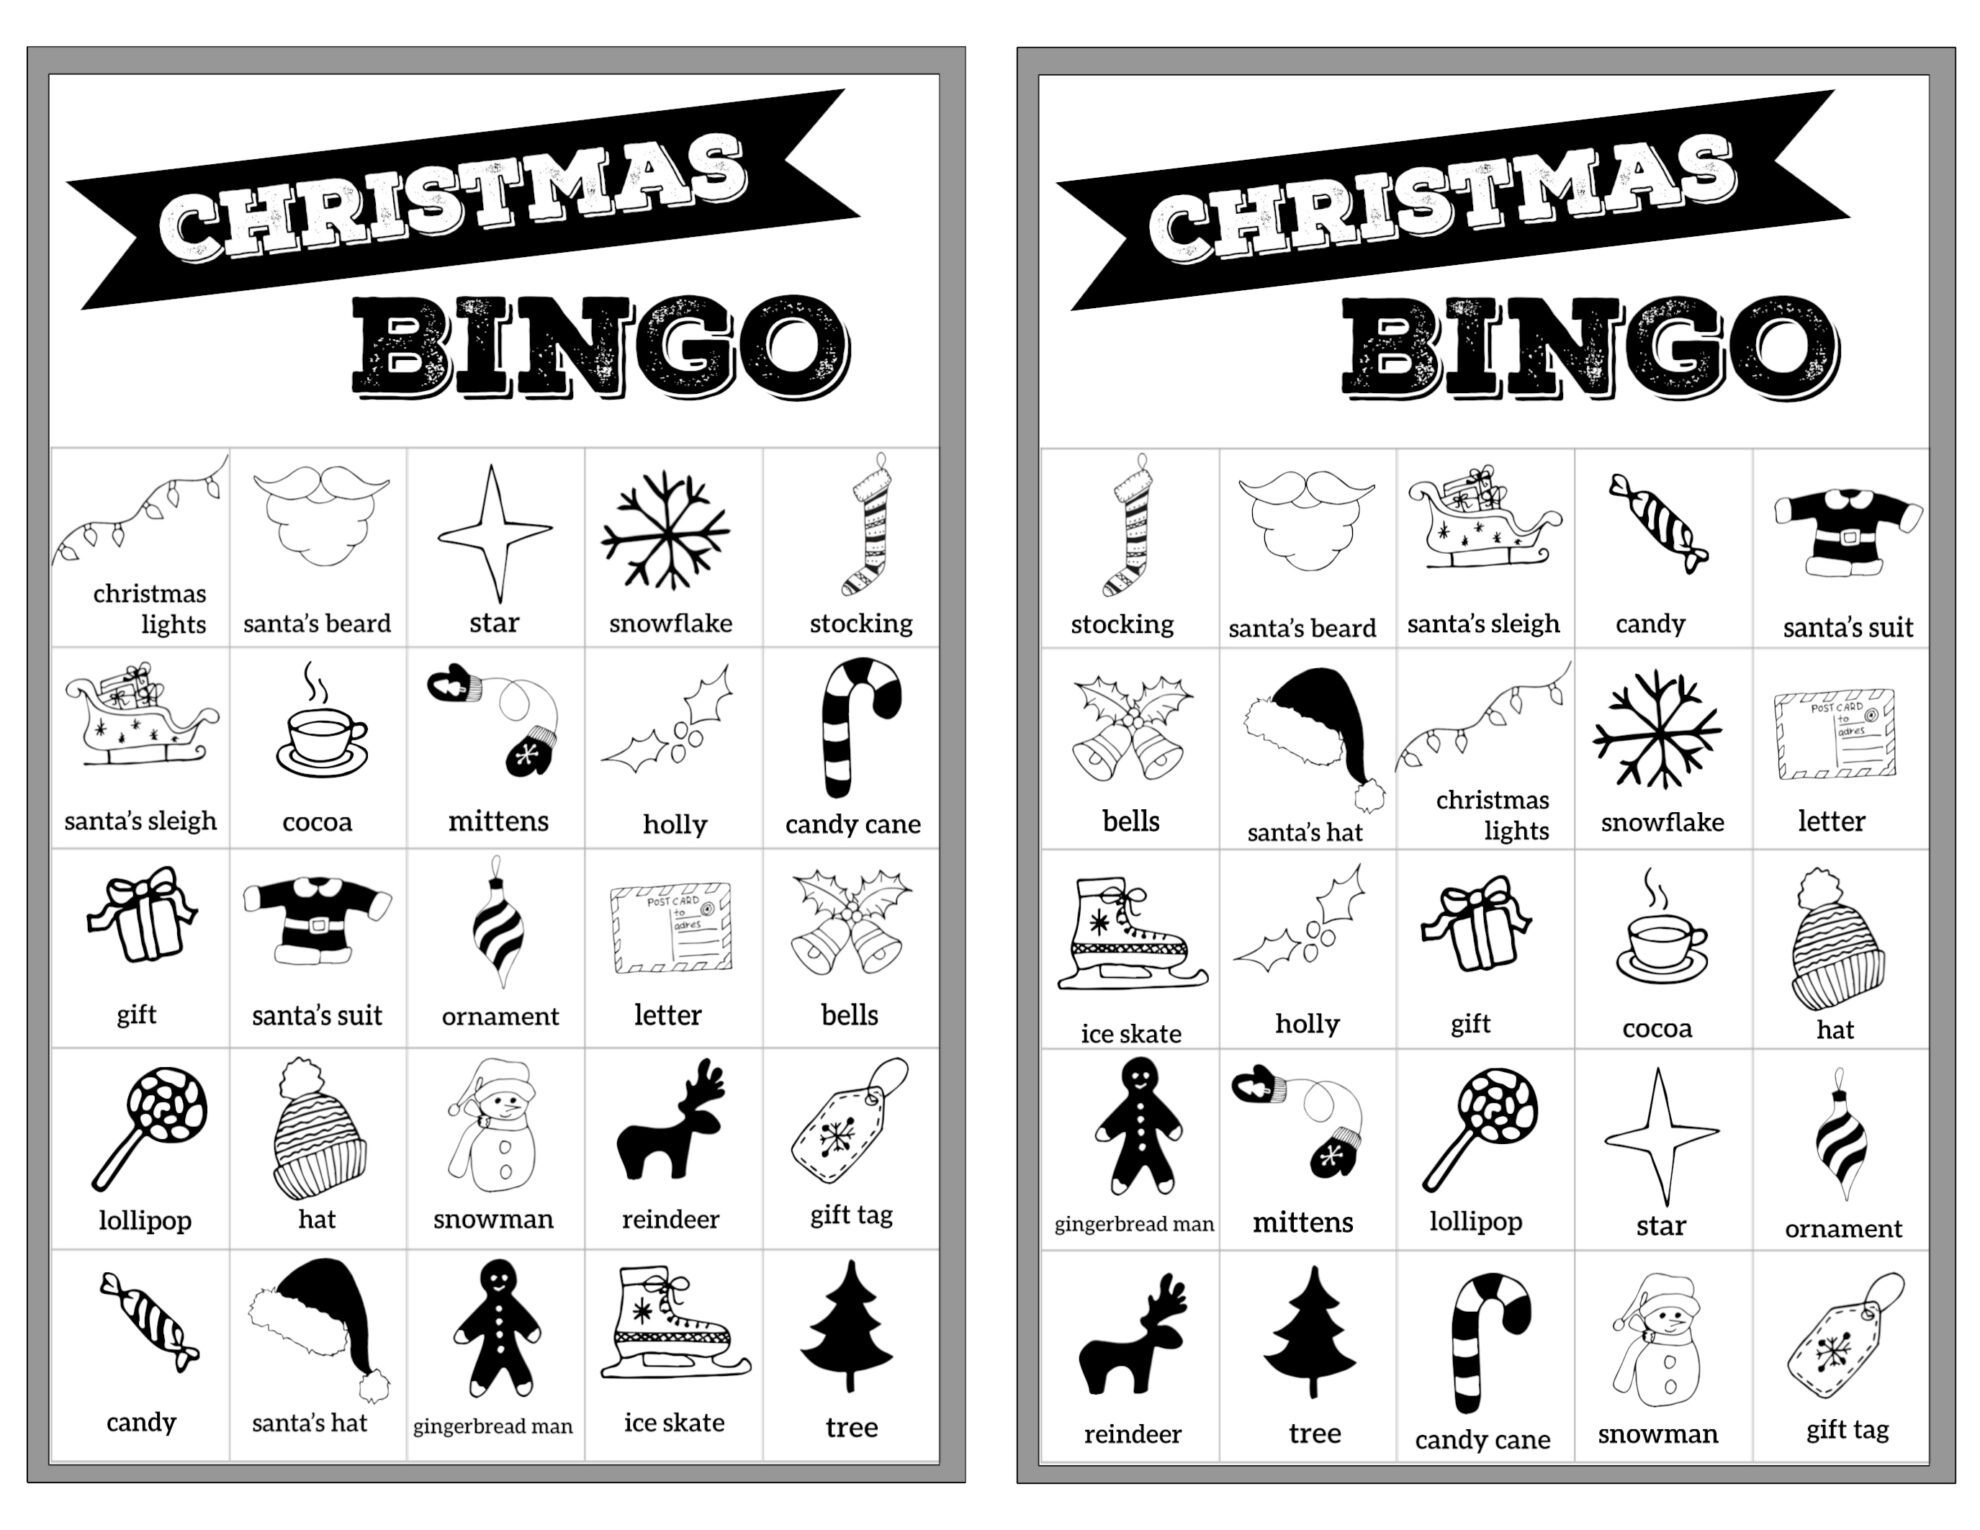 Free Christmas Bingo Printable Cards - Paper Trail Design - Free Printable Christmas Bingo Cards